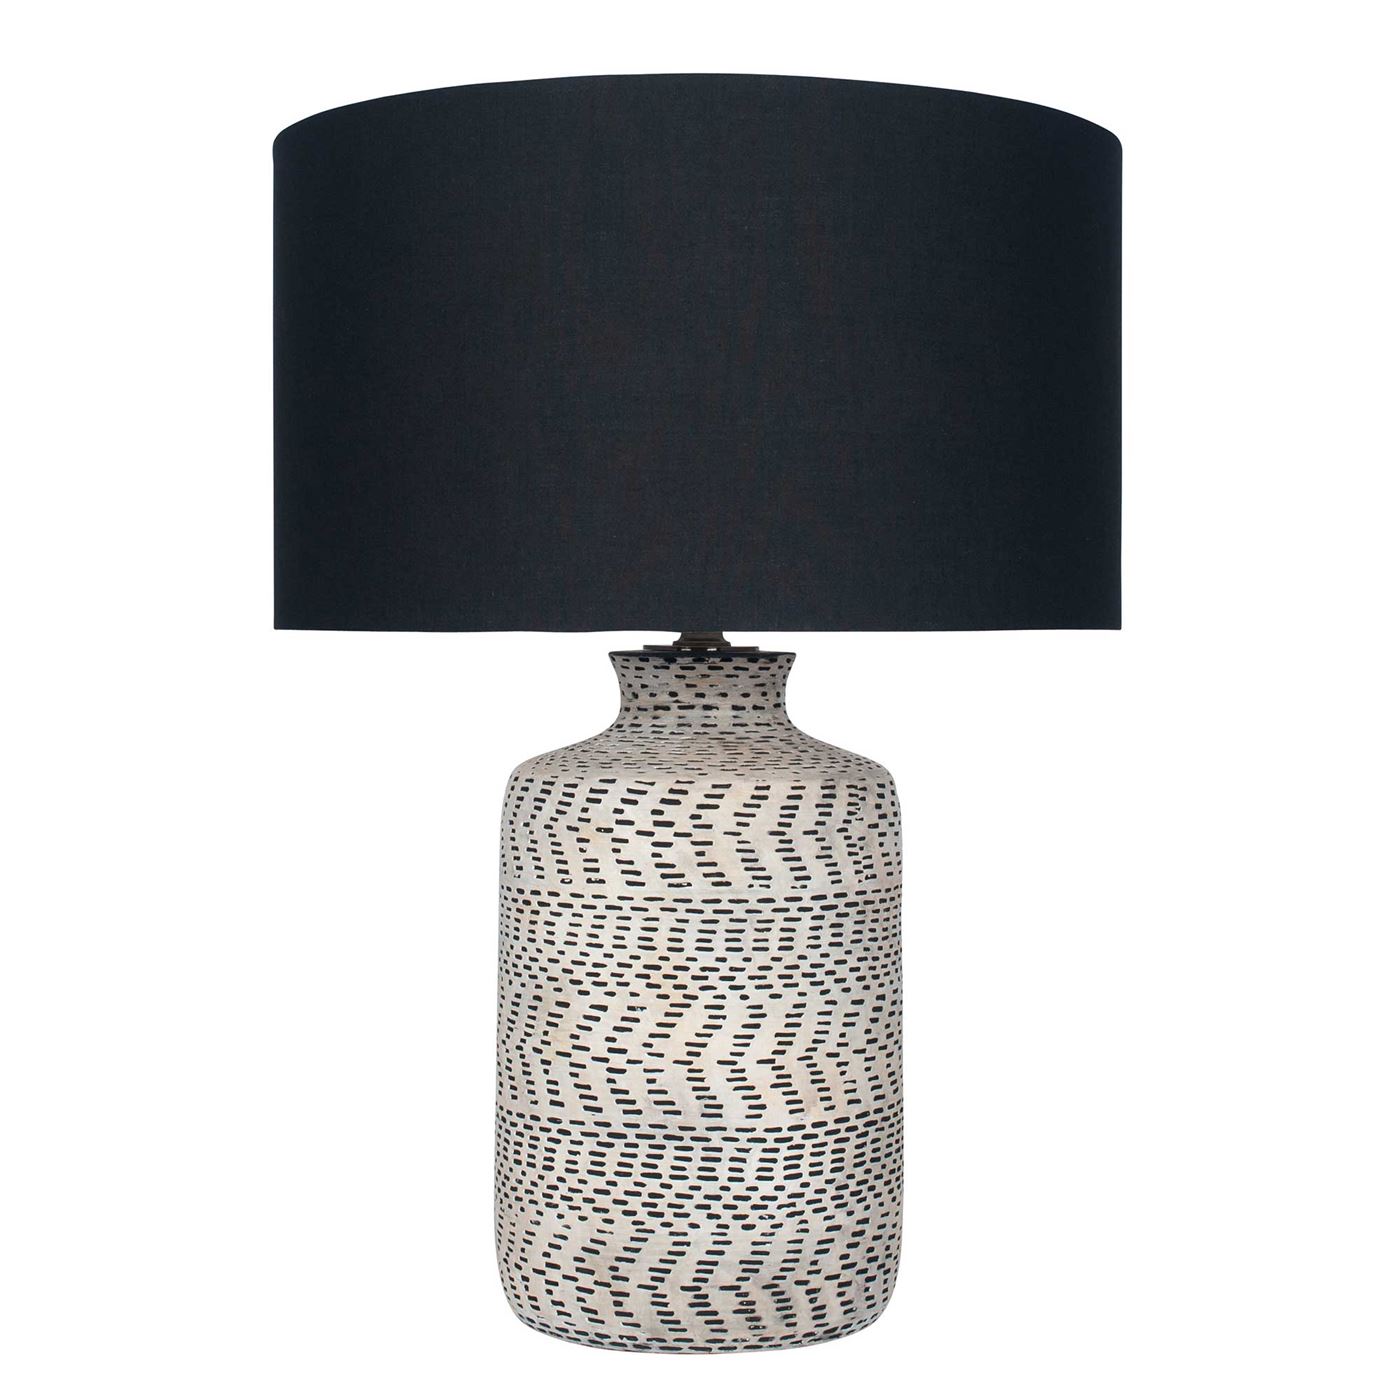 Natural & Black Textured Table Lamp, Neutral Ceramic | Barker & Stonehouse